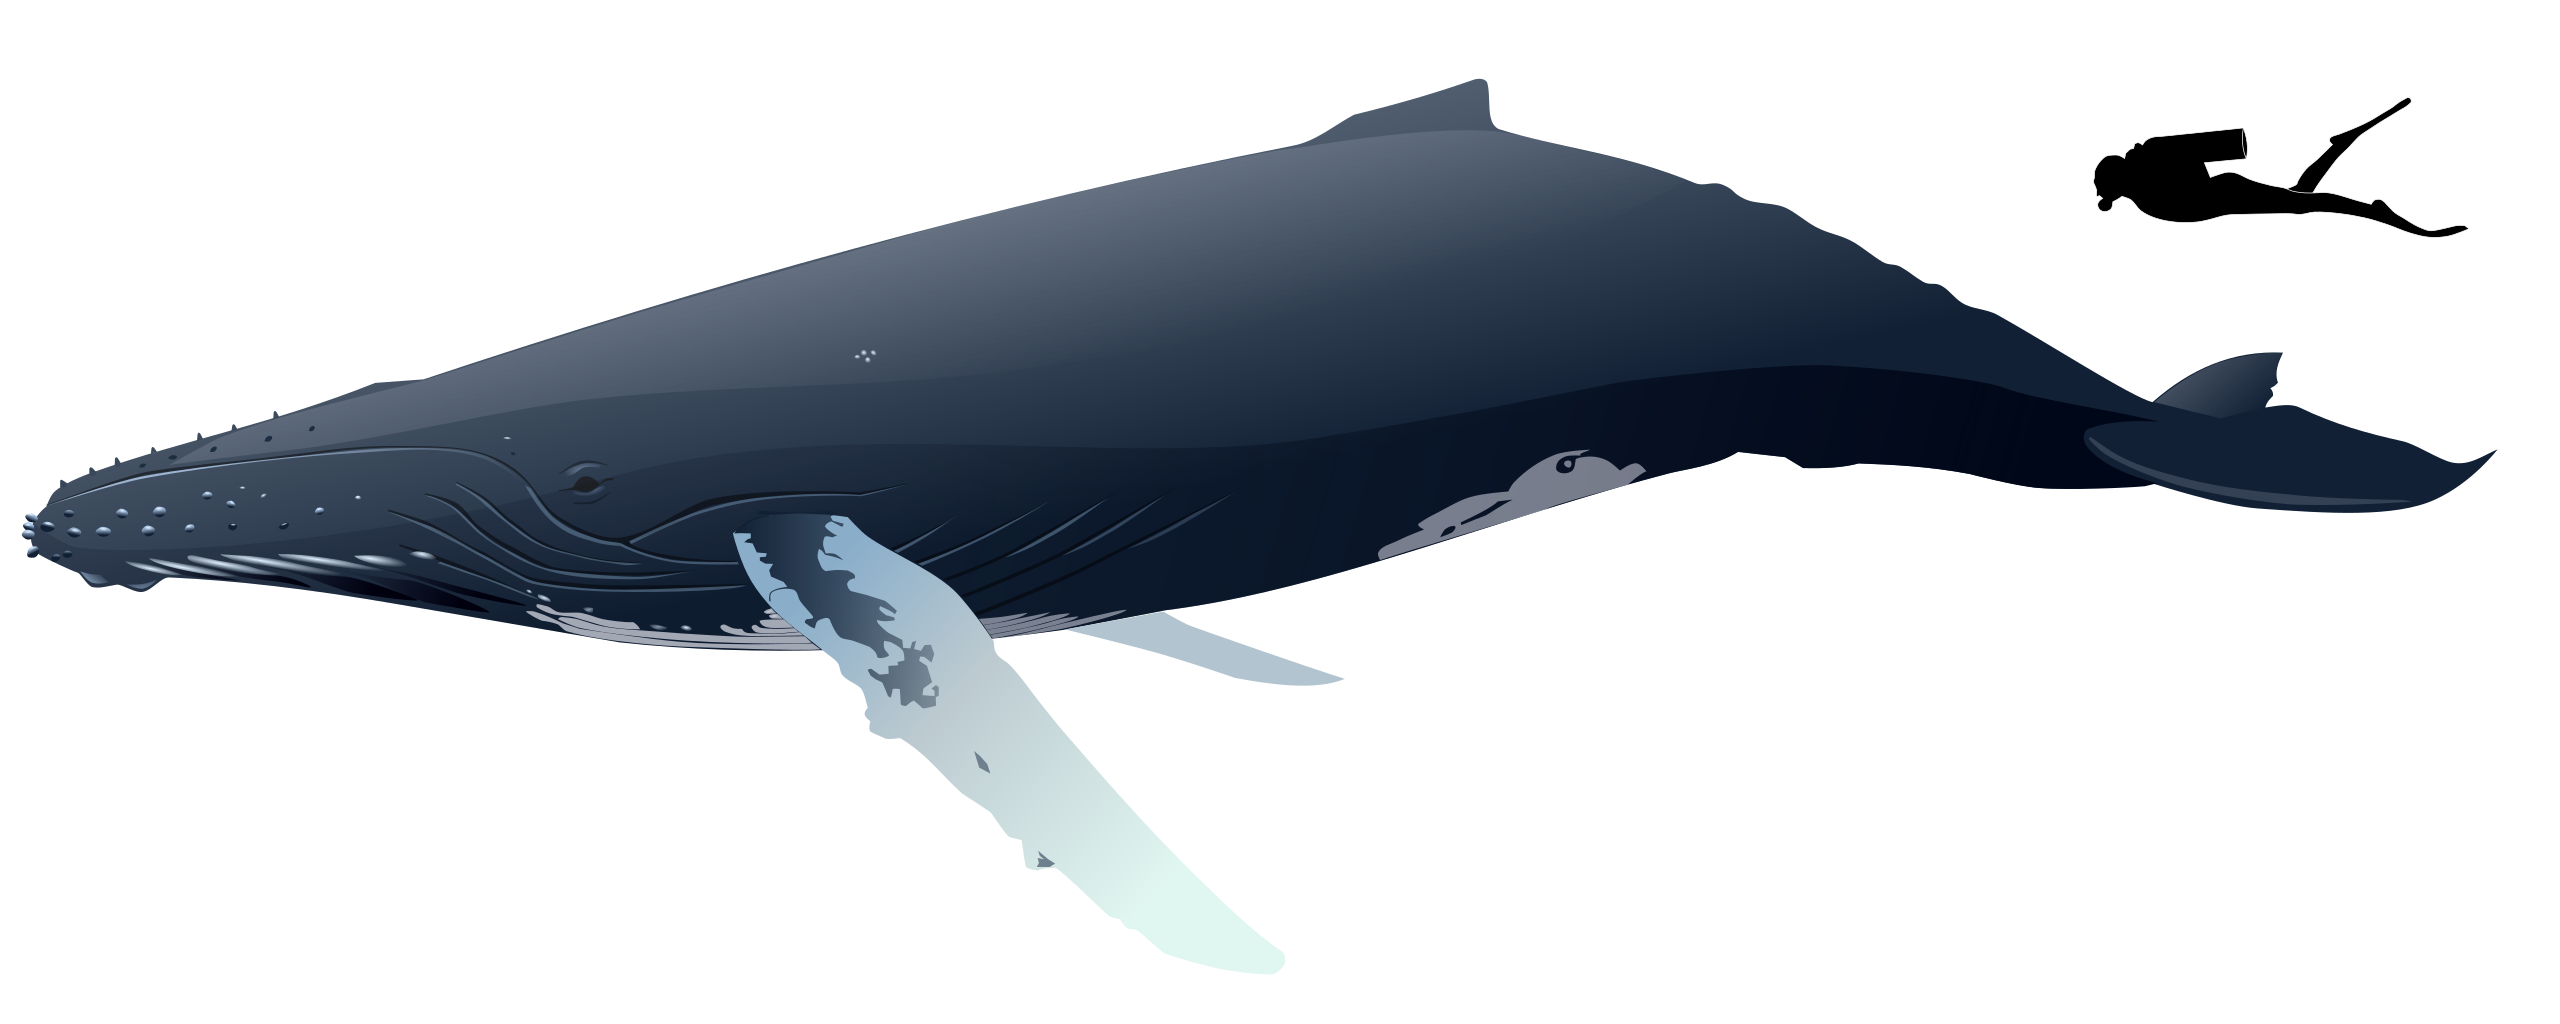 humpback whale size comparison